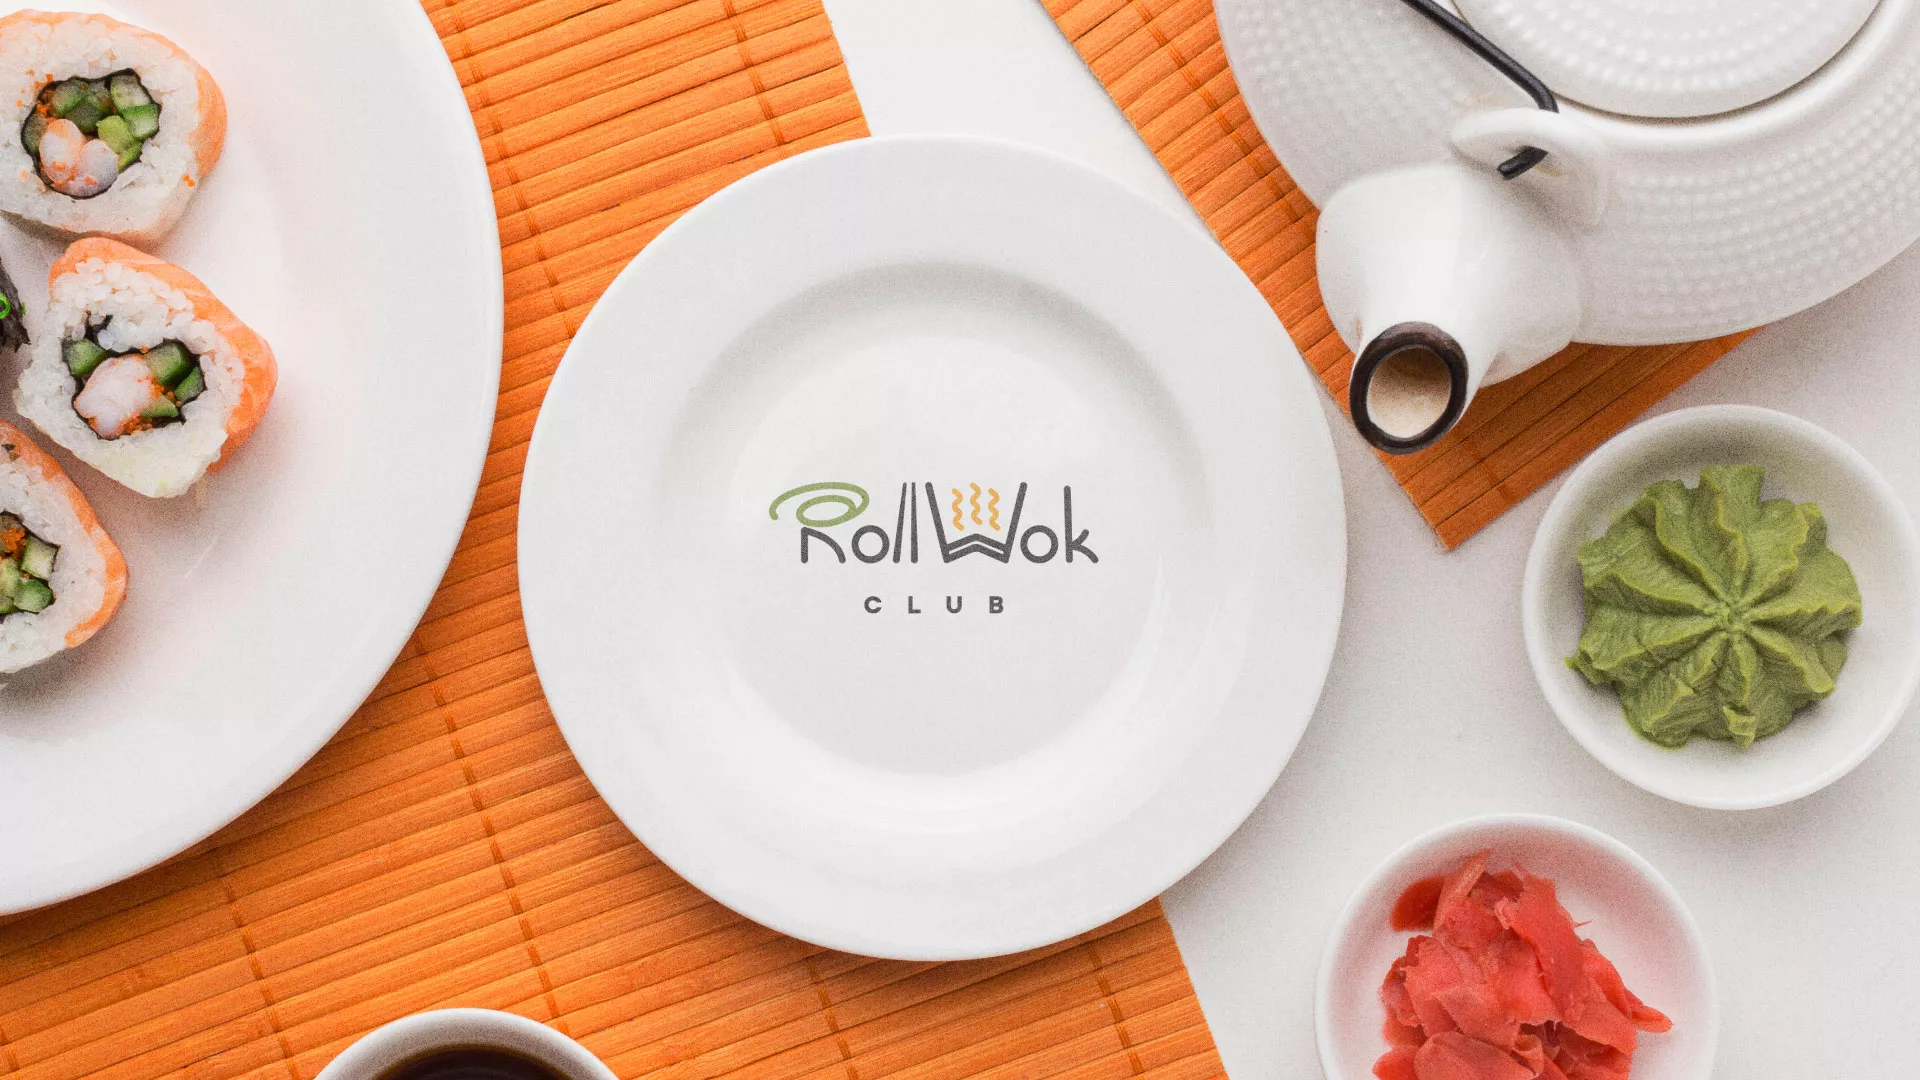 Разработка логотипа и фирменного стиля суши-бара «Roll Wok Club» в Улане-Удэ